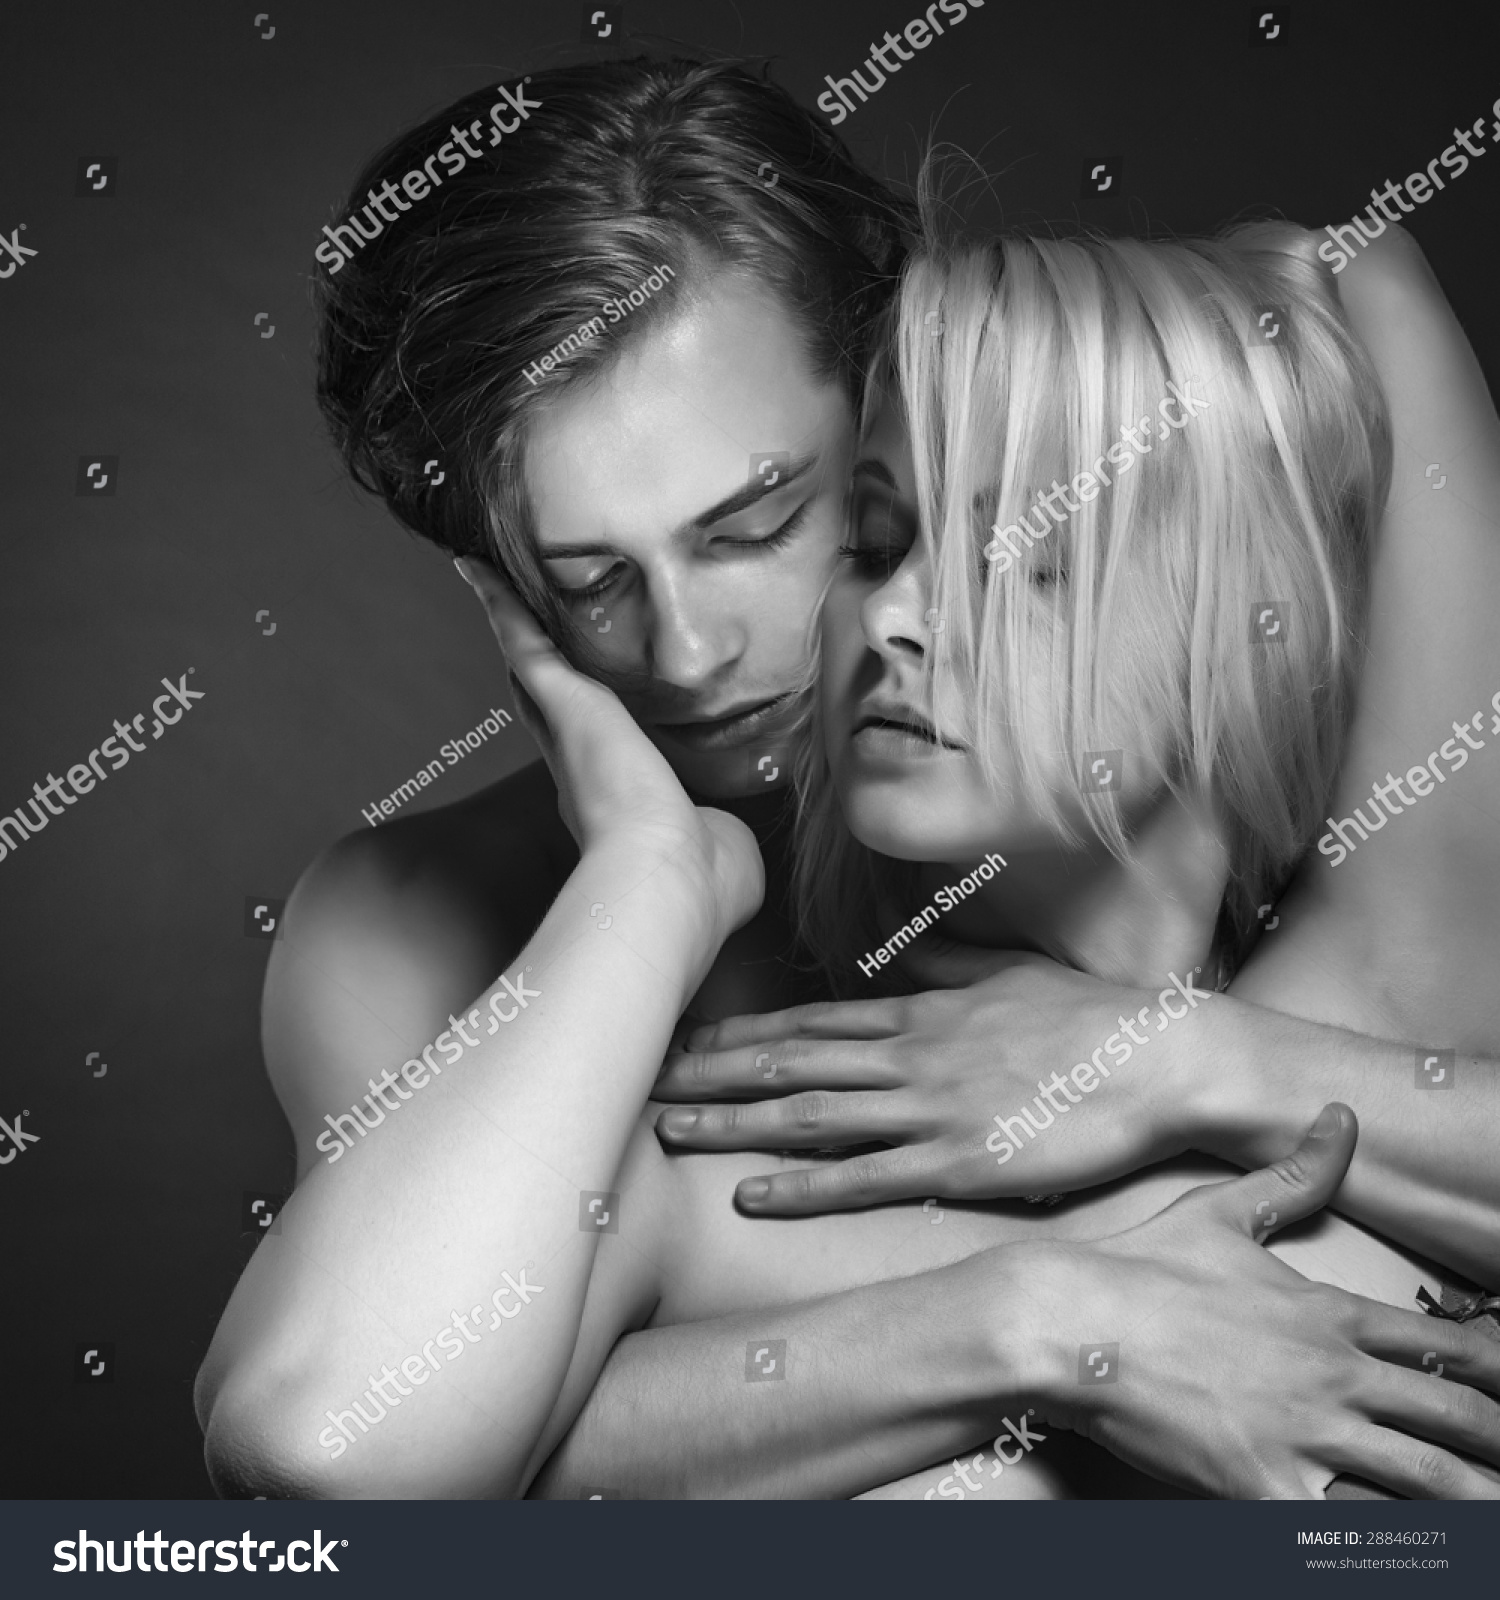 Black and white erotic love photo